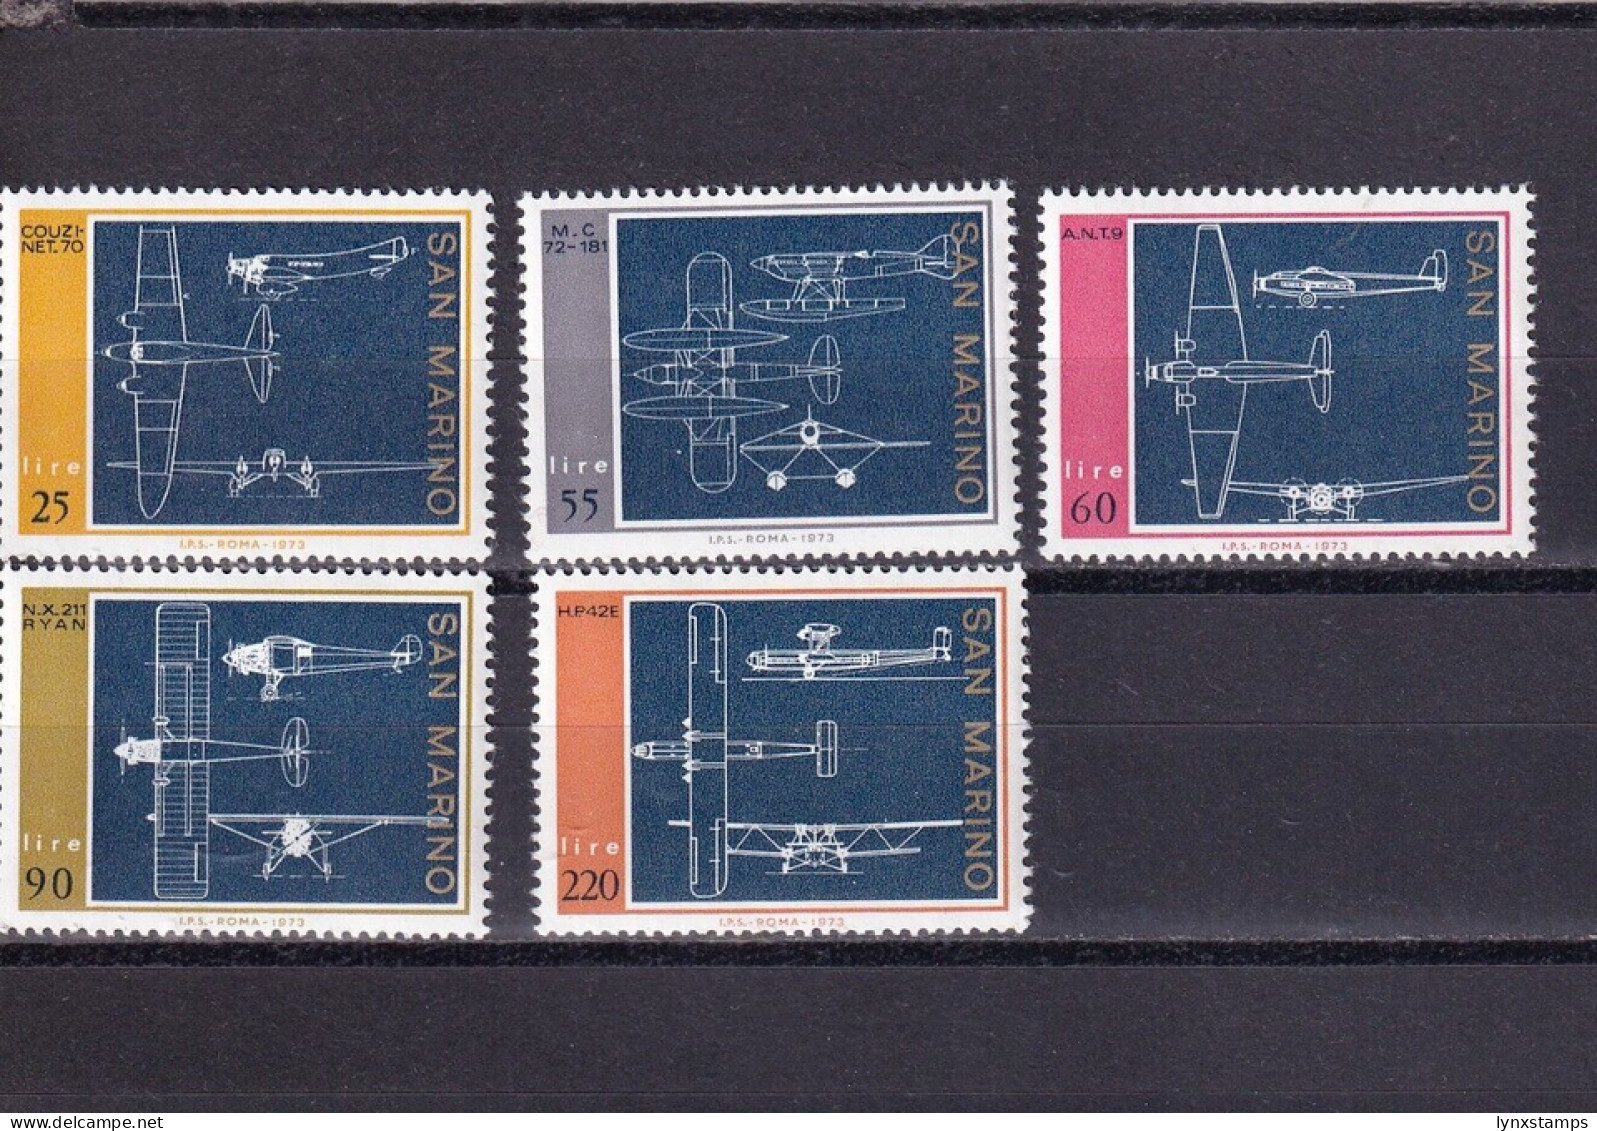 SA02 San Marino 1973 Plane Blueprint Mint Stamps - Unused Stamps